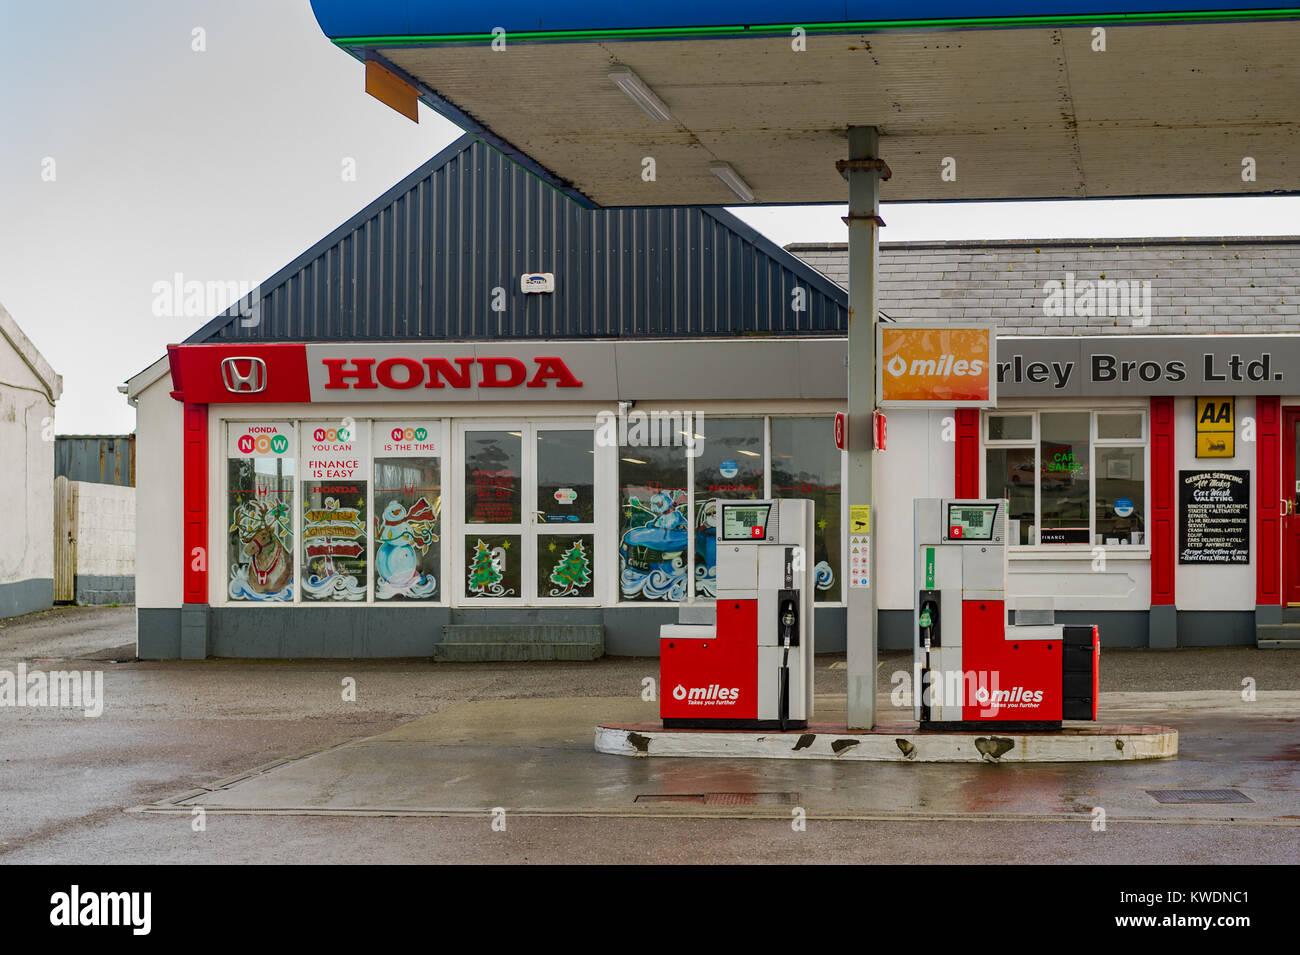 Honda garage selling petrol and diesel in Skibbereen, County Cork, Ireland. Stock Photo